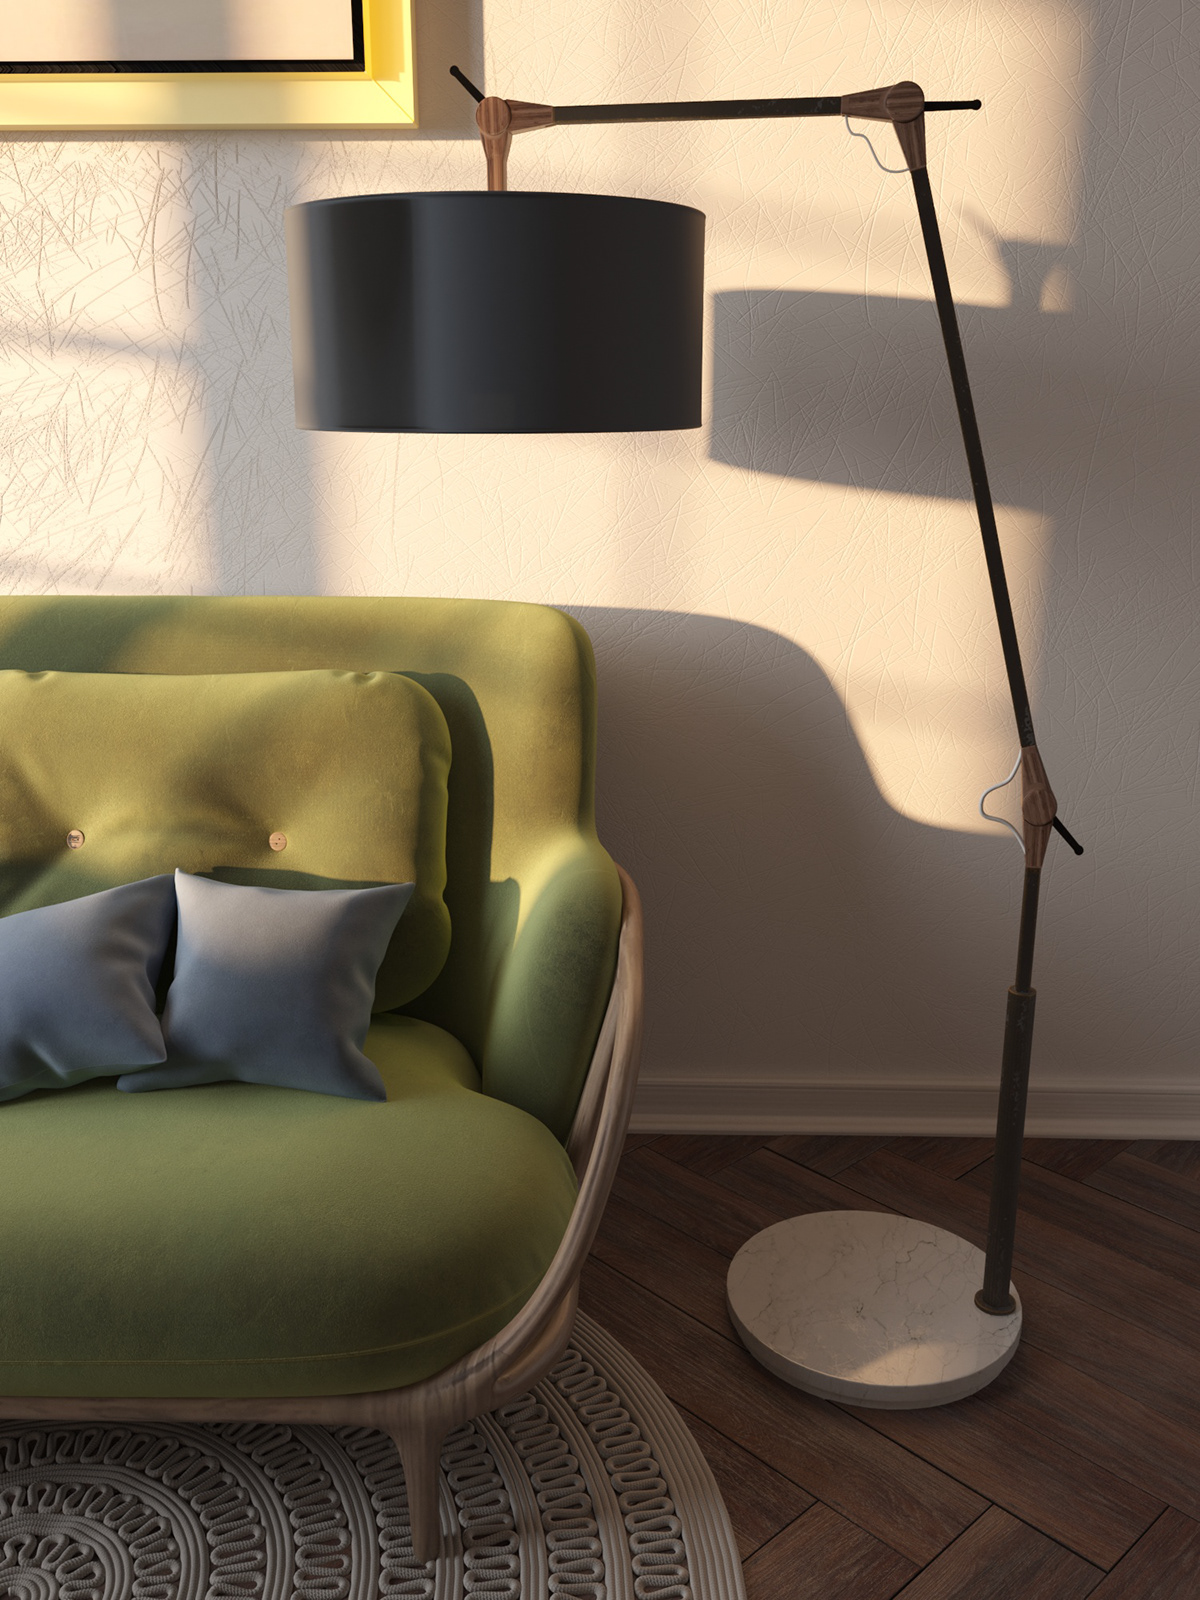 3ds max archviz CGI furniture Interior living room Porada Render visualization wood